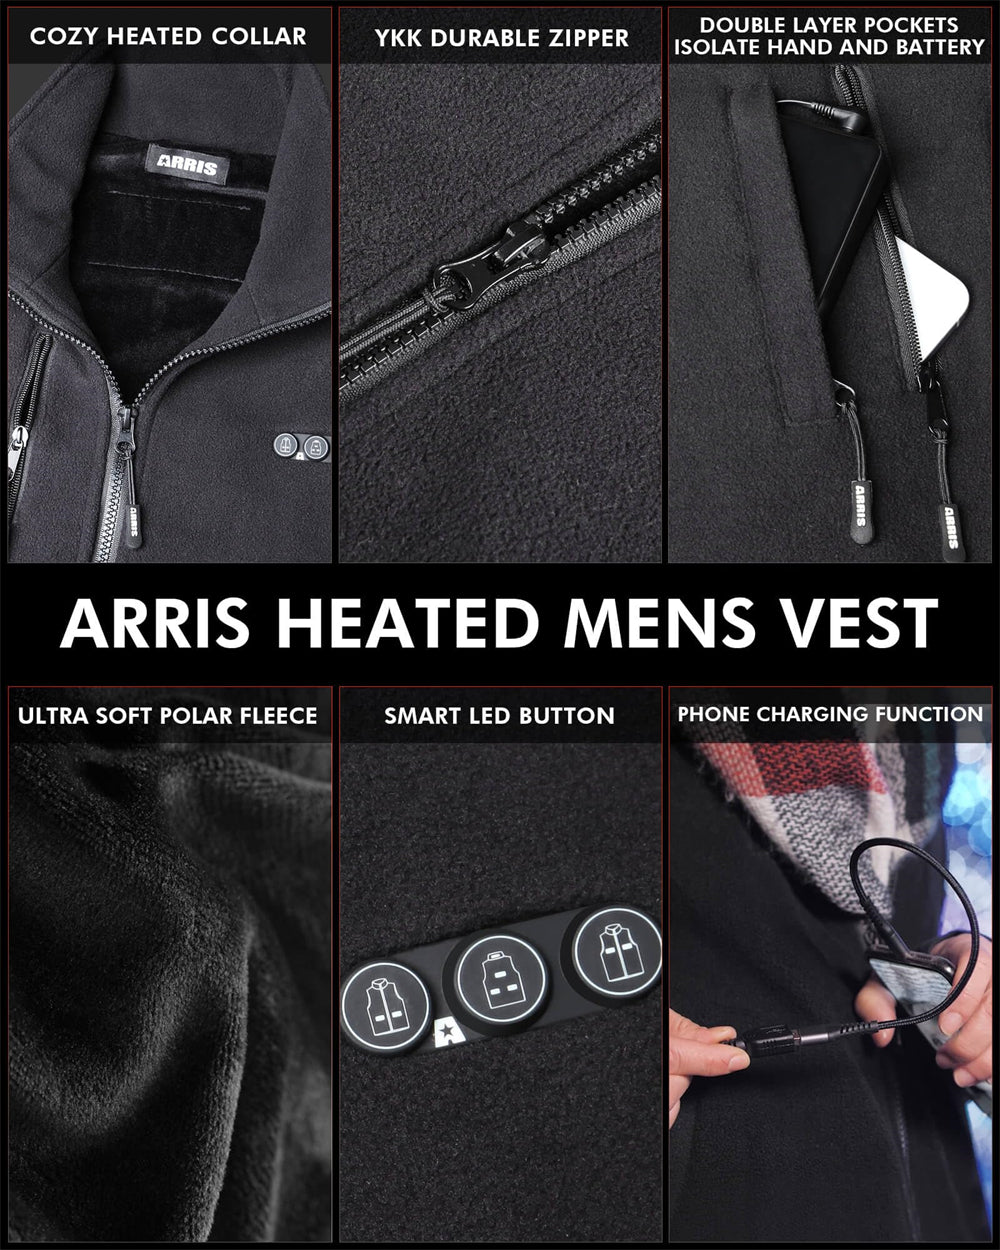 main features of arris heated men's vest